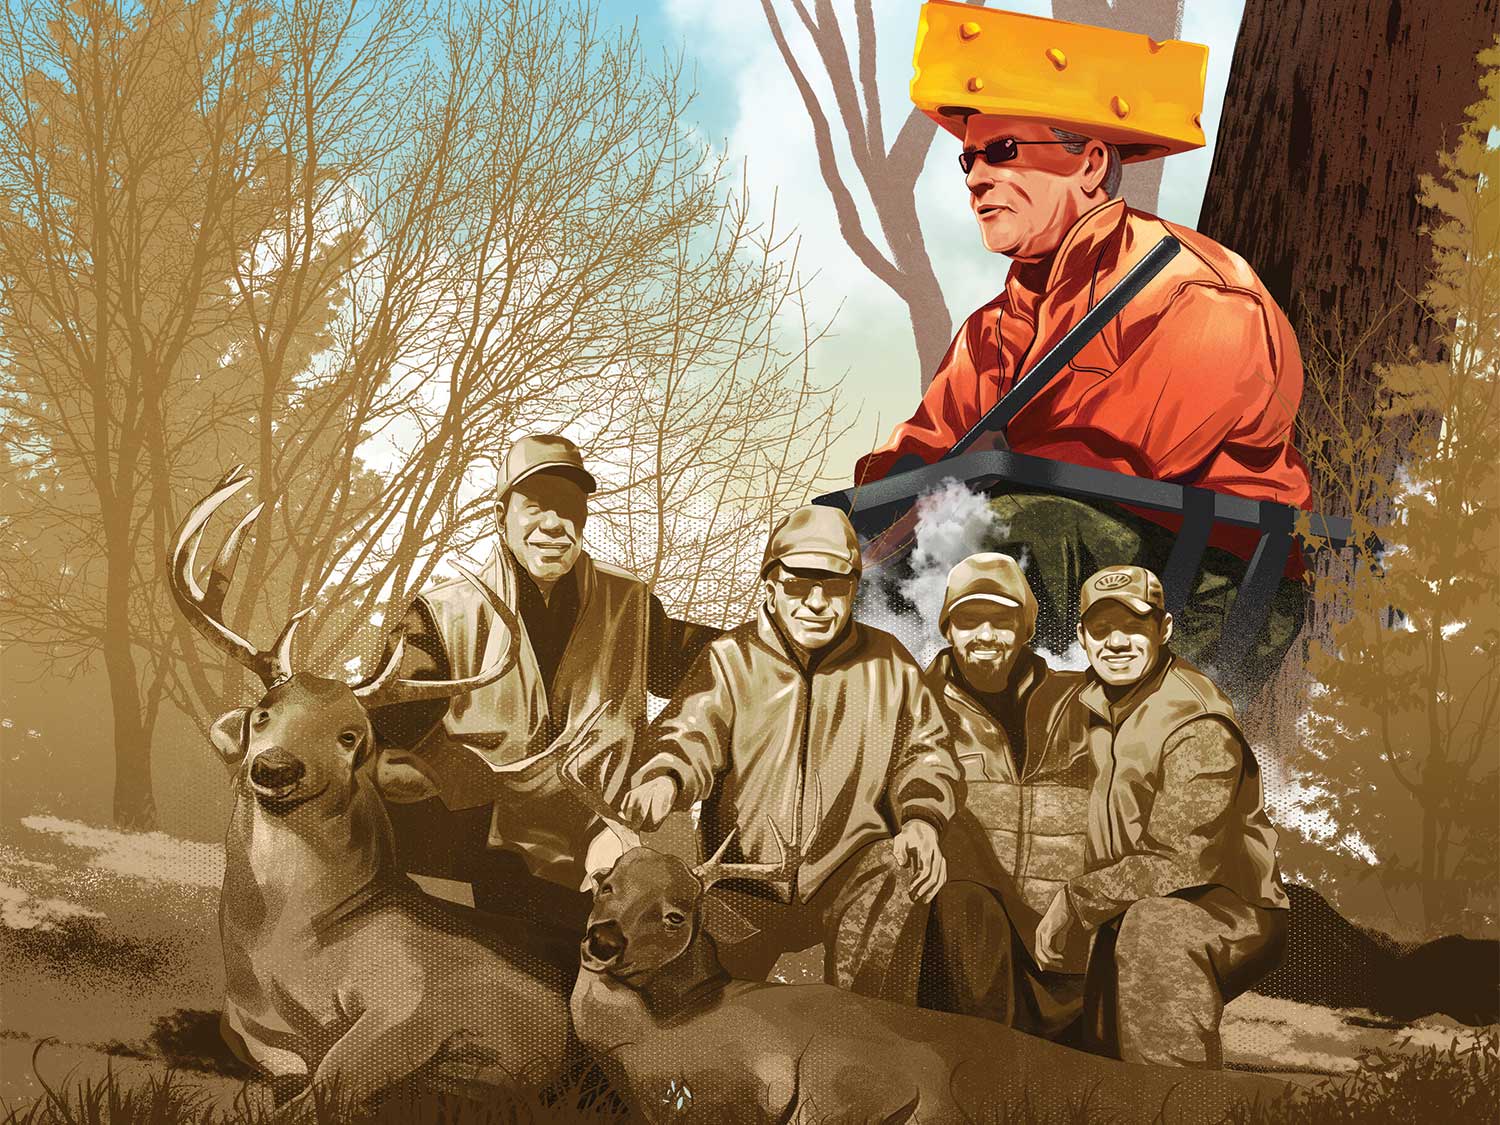 Illustration of hunters kneeling behind deer while one wears a cheese wedge shaped hat.